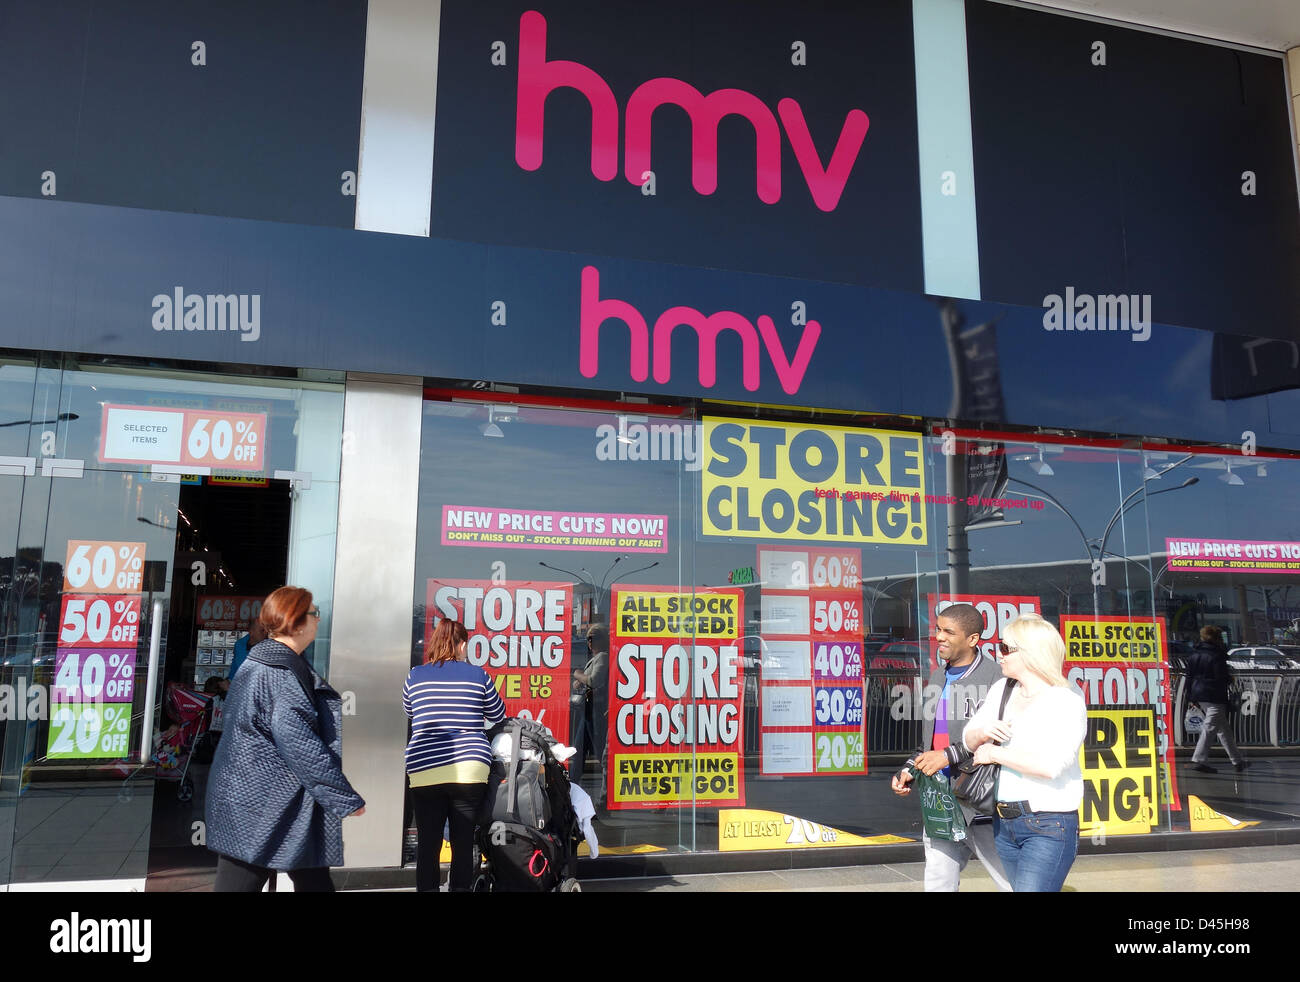 Tienda HMV Castlepoint cierre de venta, Bournemouth, Dorset, Inglaterra, Reino Unido Foto de stock